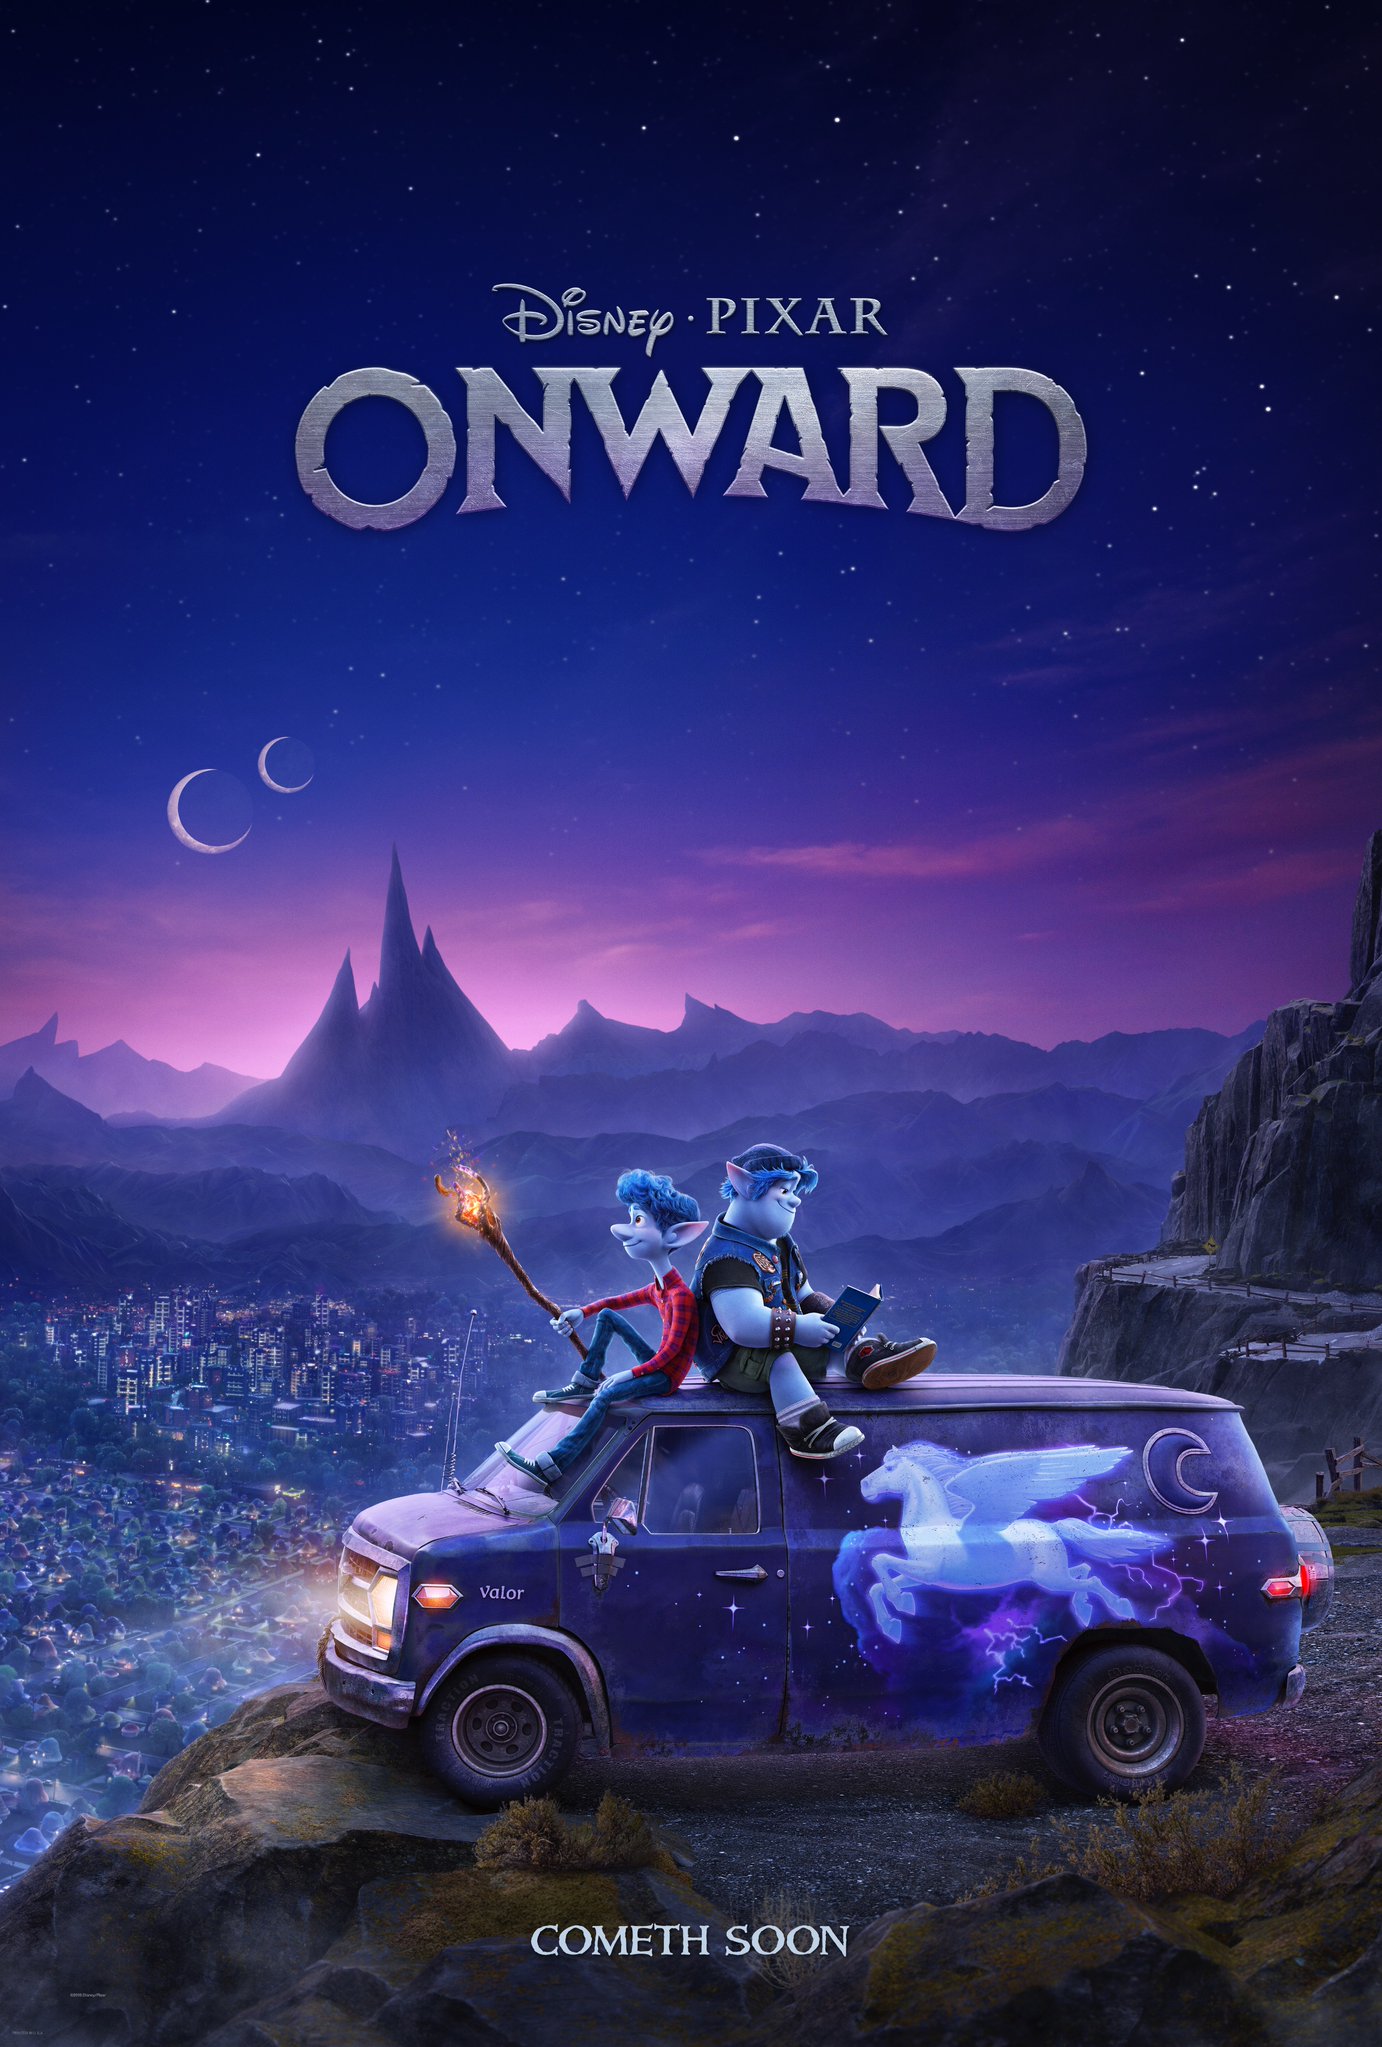 Trailer: Tom Holland And Chris Pratt Go On An Adventure In Pixar’s Onward